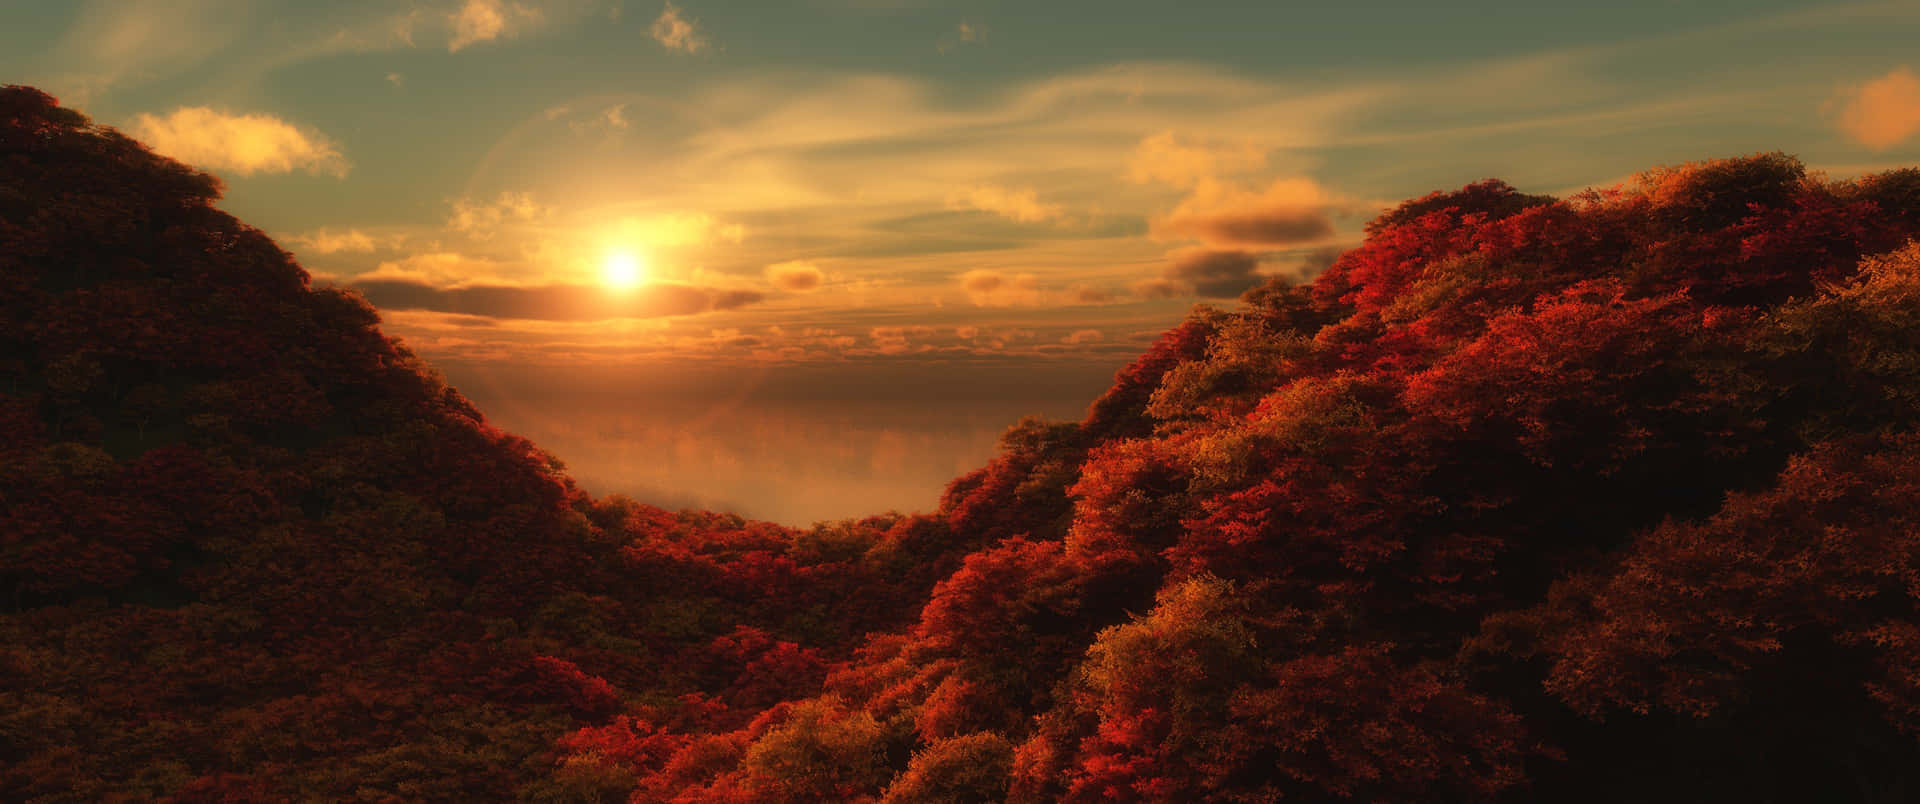 3440x1440 Fall Season Mountain With Sunset Wallpaper